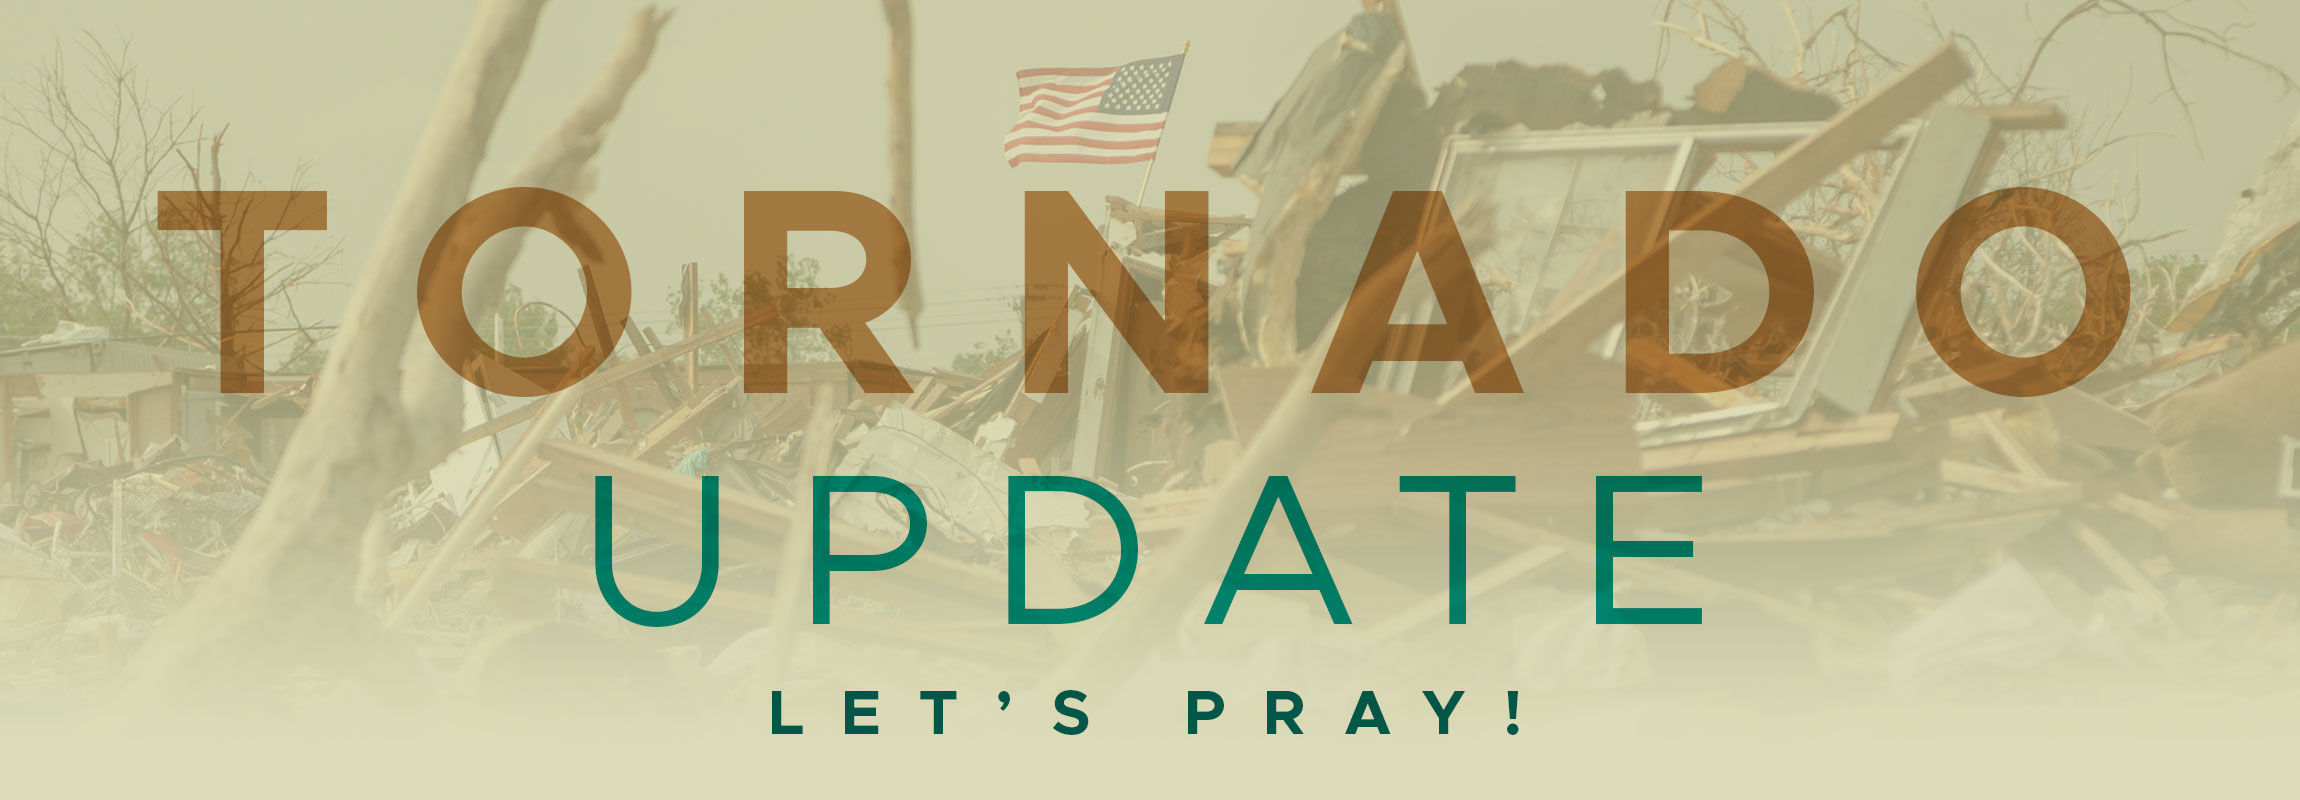 Tornado Update — Let’s Pray!